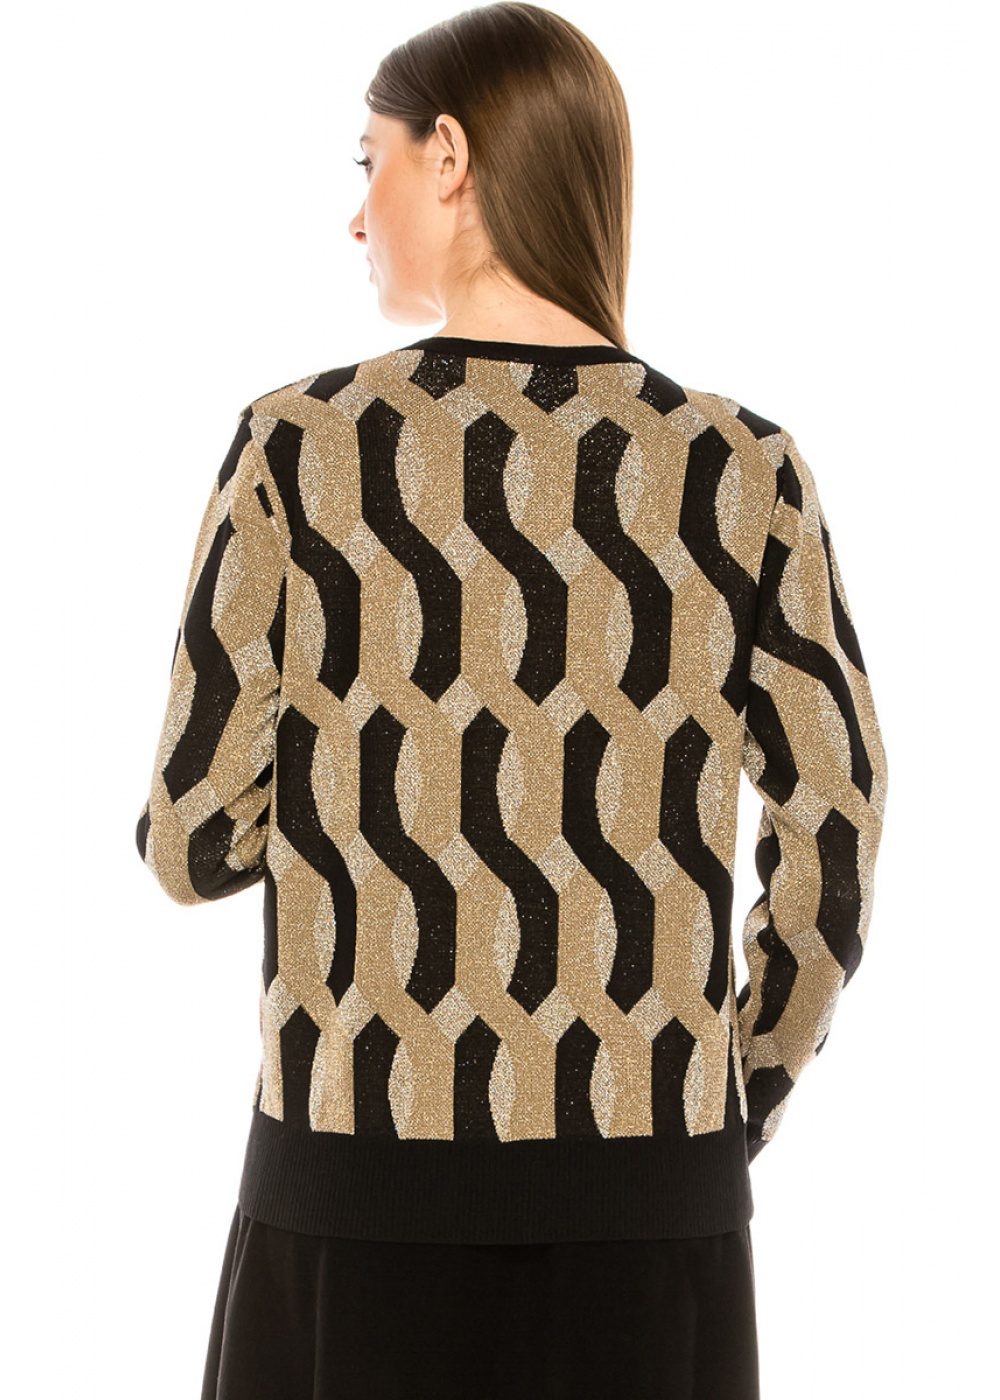 Wavy rhombuses pattern sweater in gold & silver